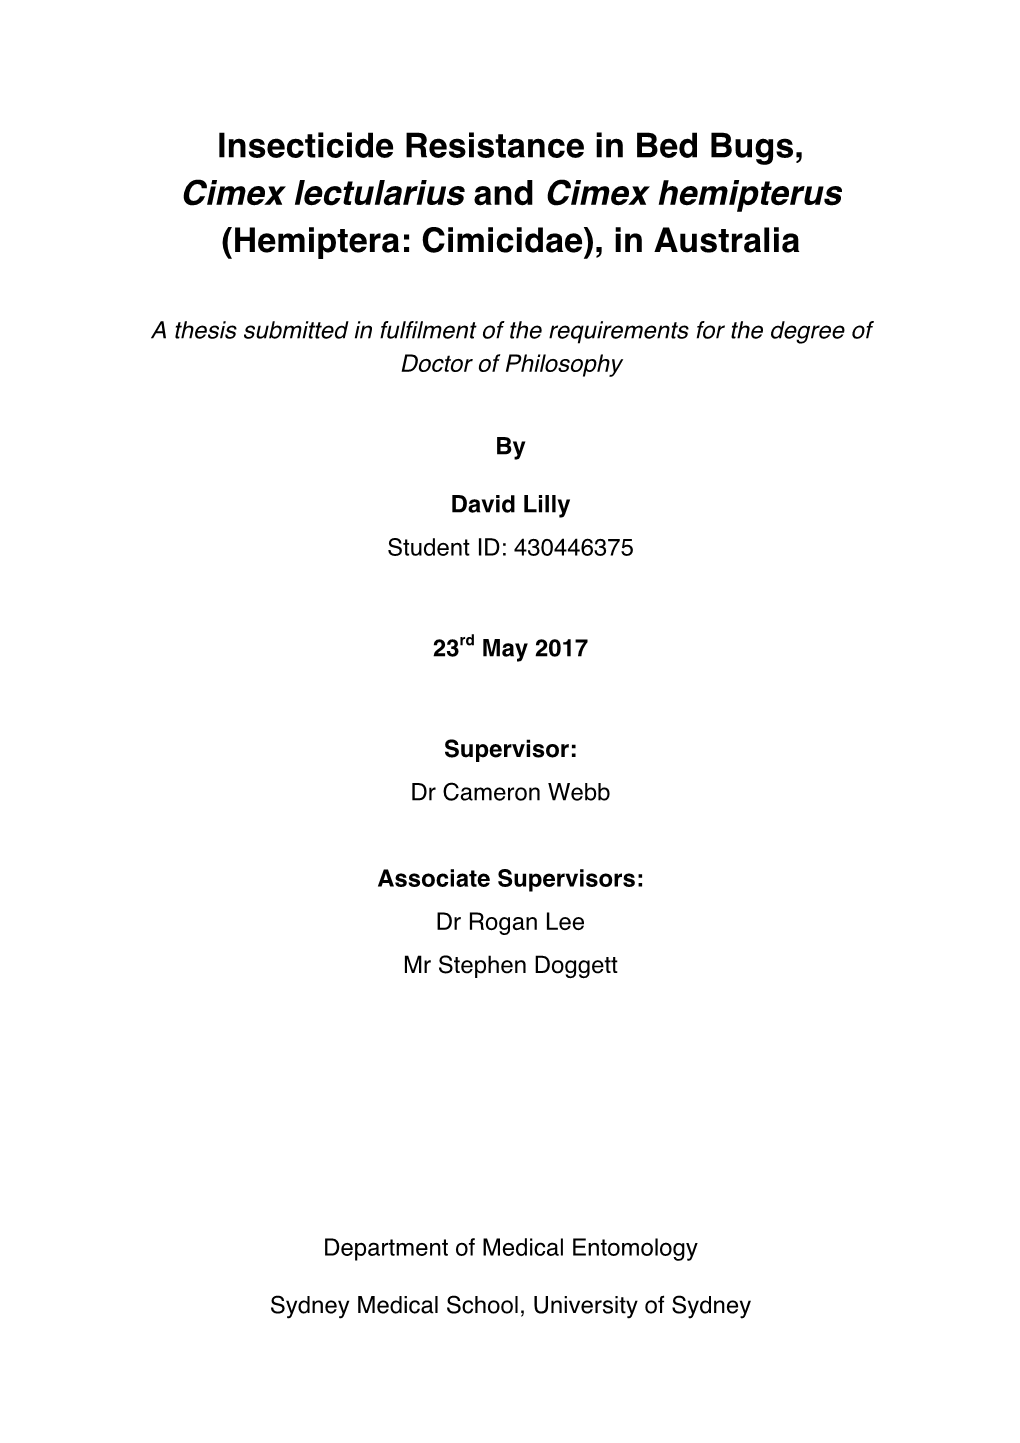 Insecticide Resistance in Bed Bugs, Cimex Lectularius and Cimex Hemipterus (Hemiptera: Cimicidae), in Australia